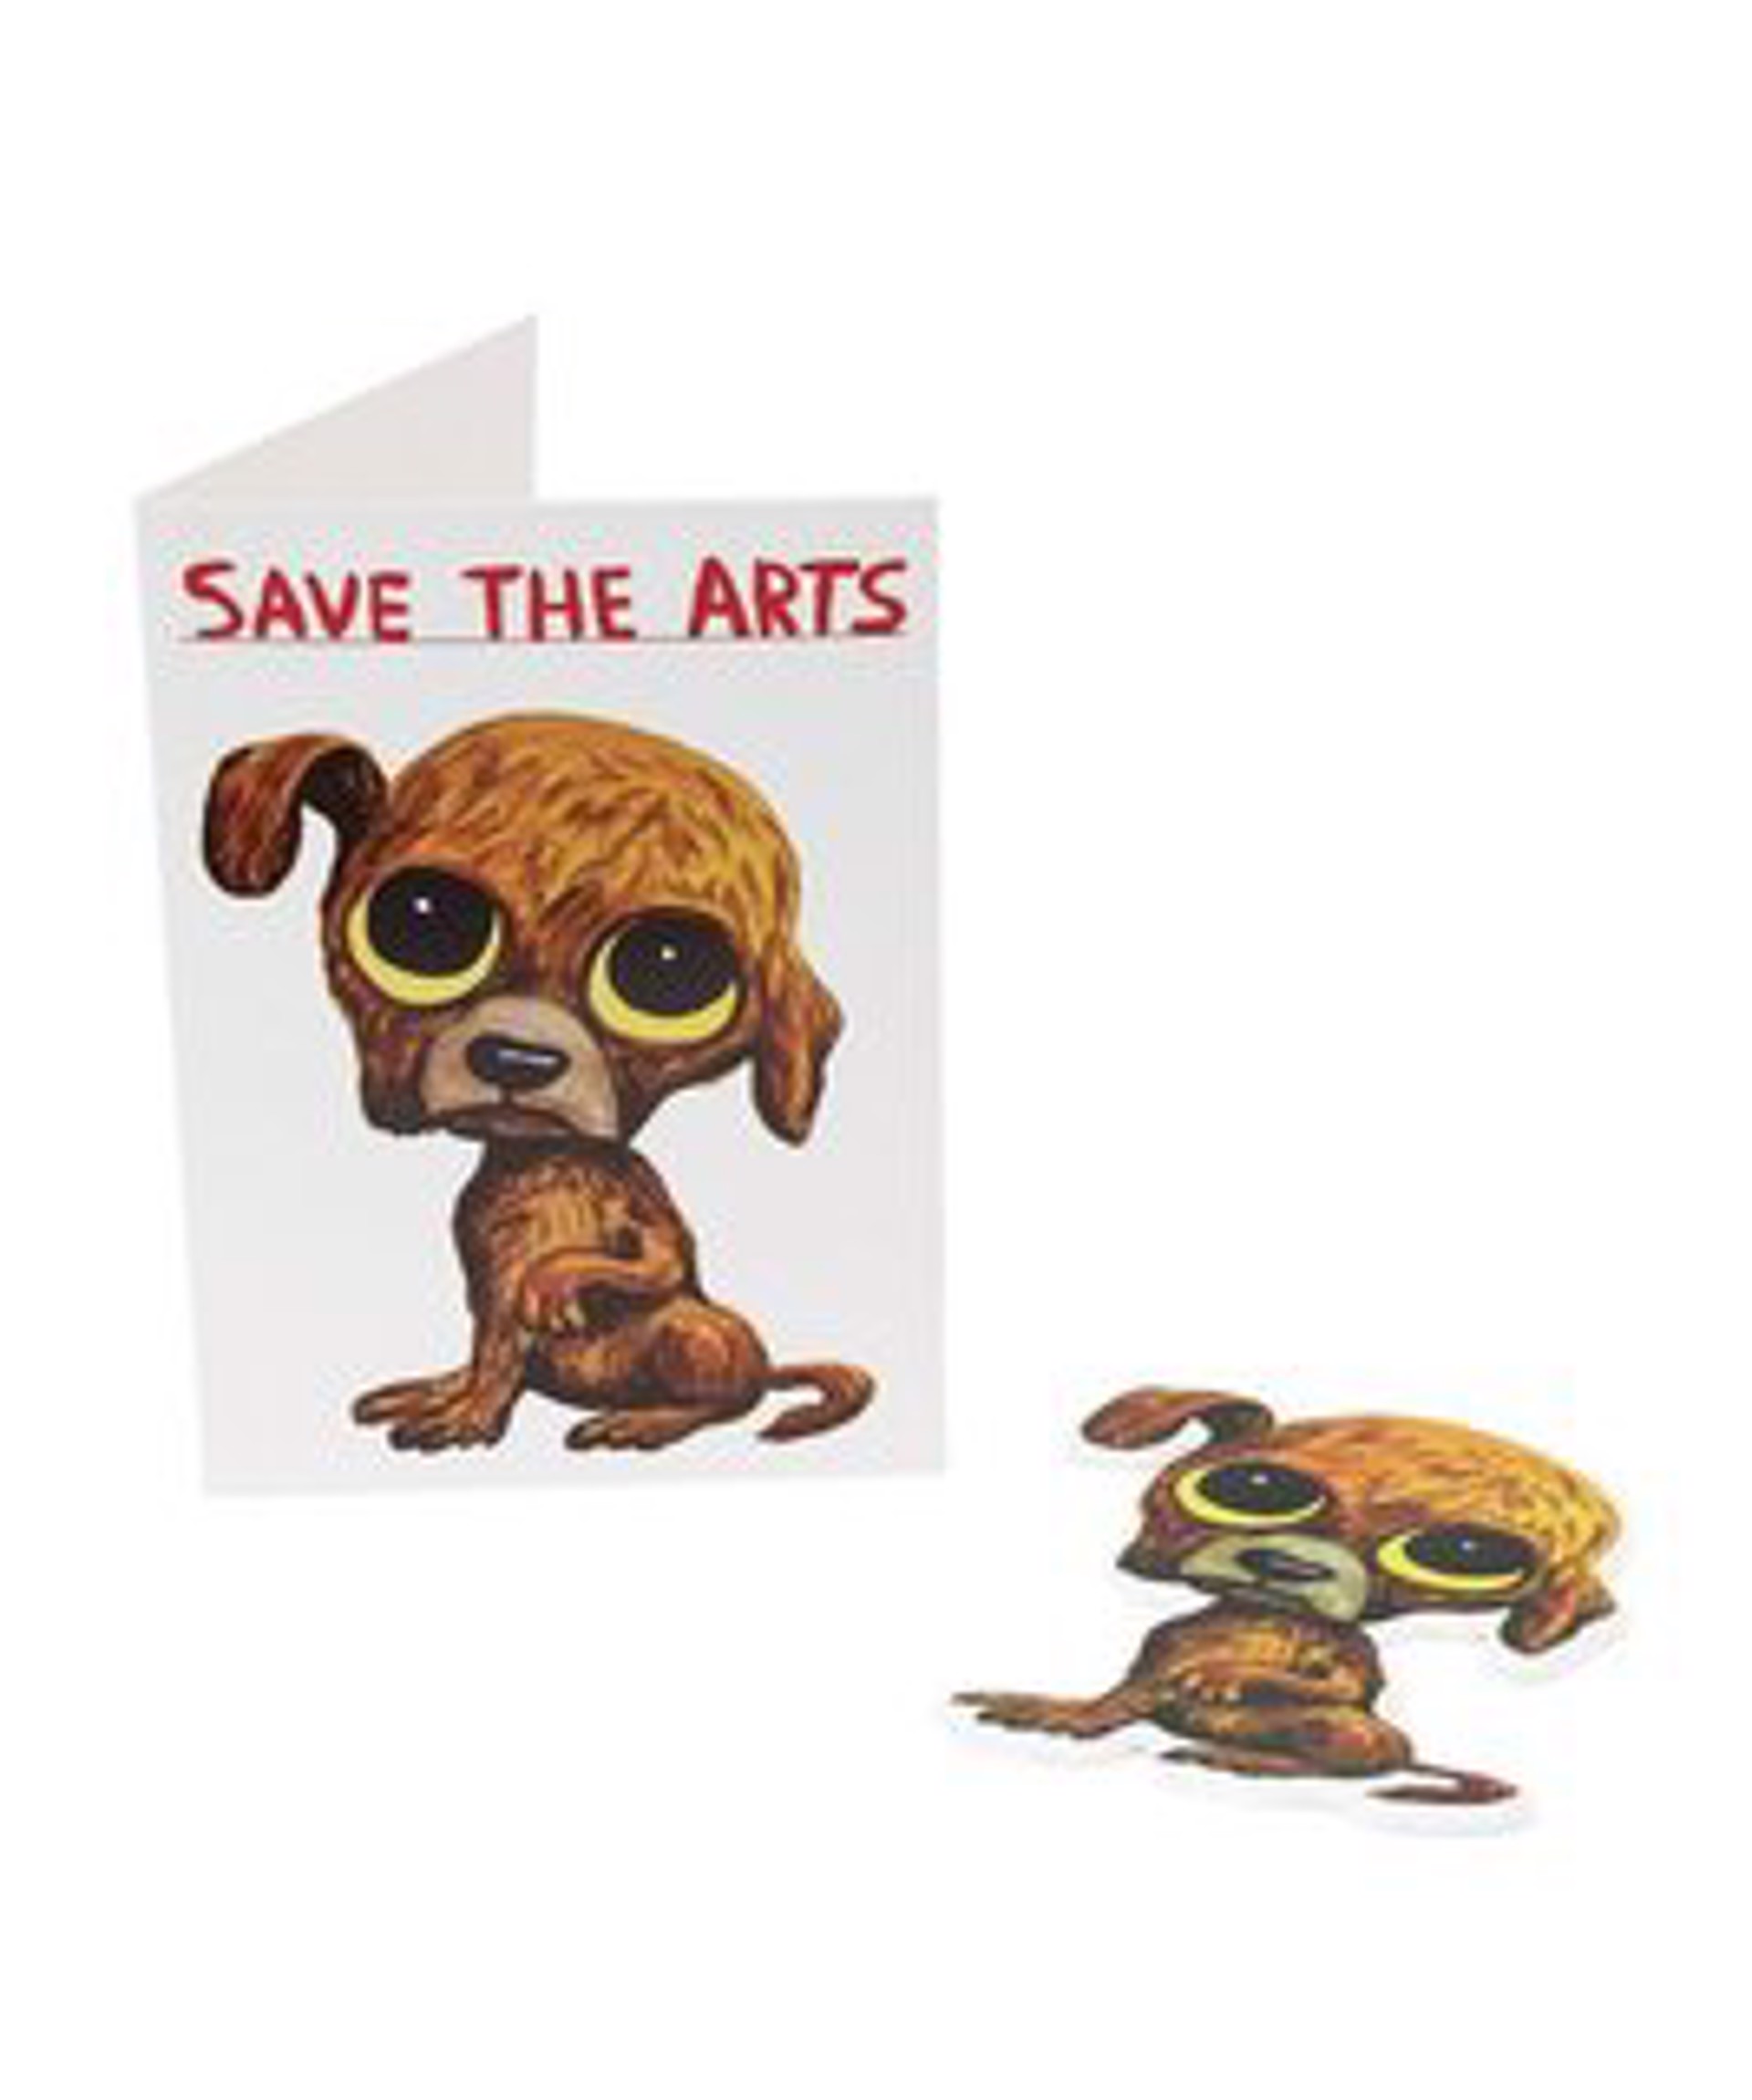 Save the Arts Puffy Sticker Card by David Shrigley